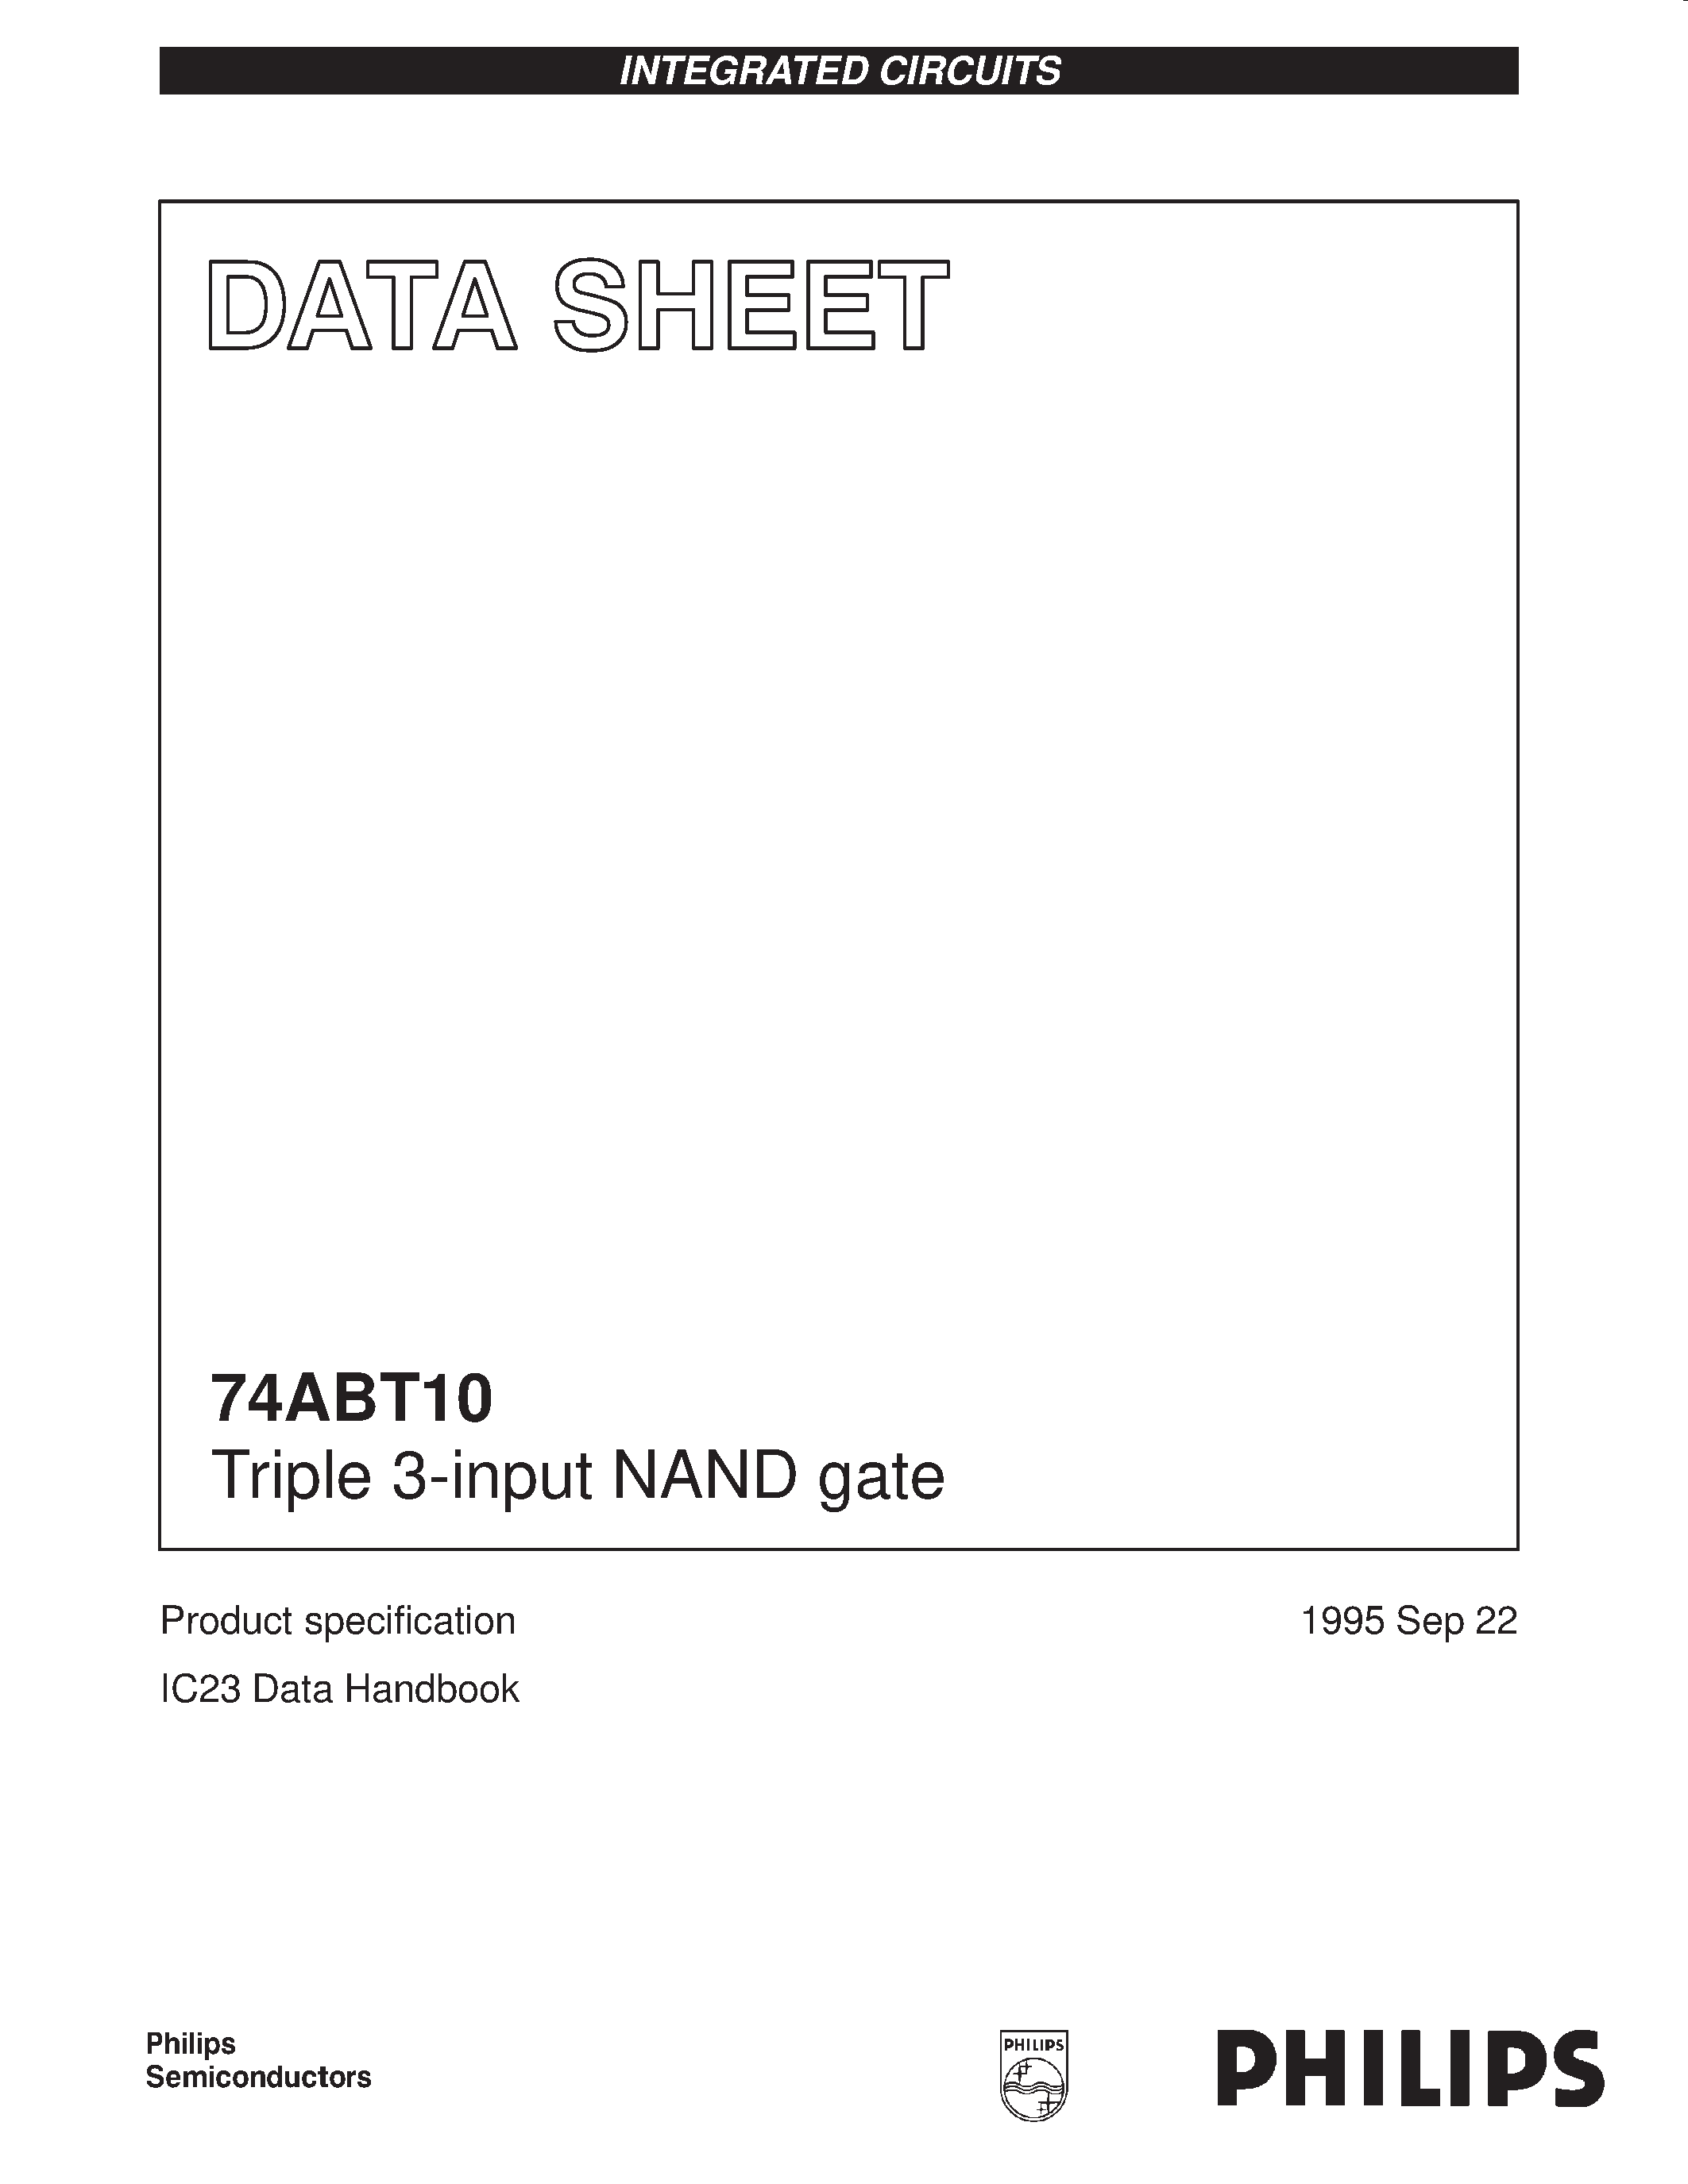 Даташит 74ABT10PW - Triple 3-input NAND gate страница 1